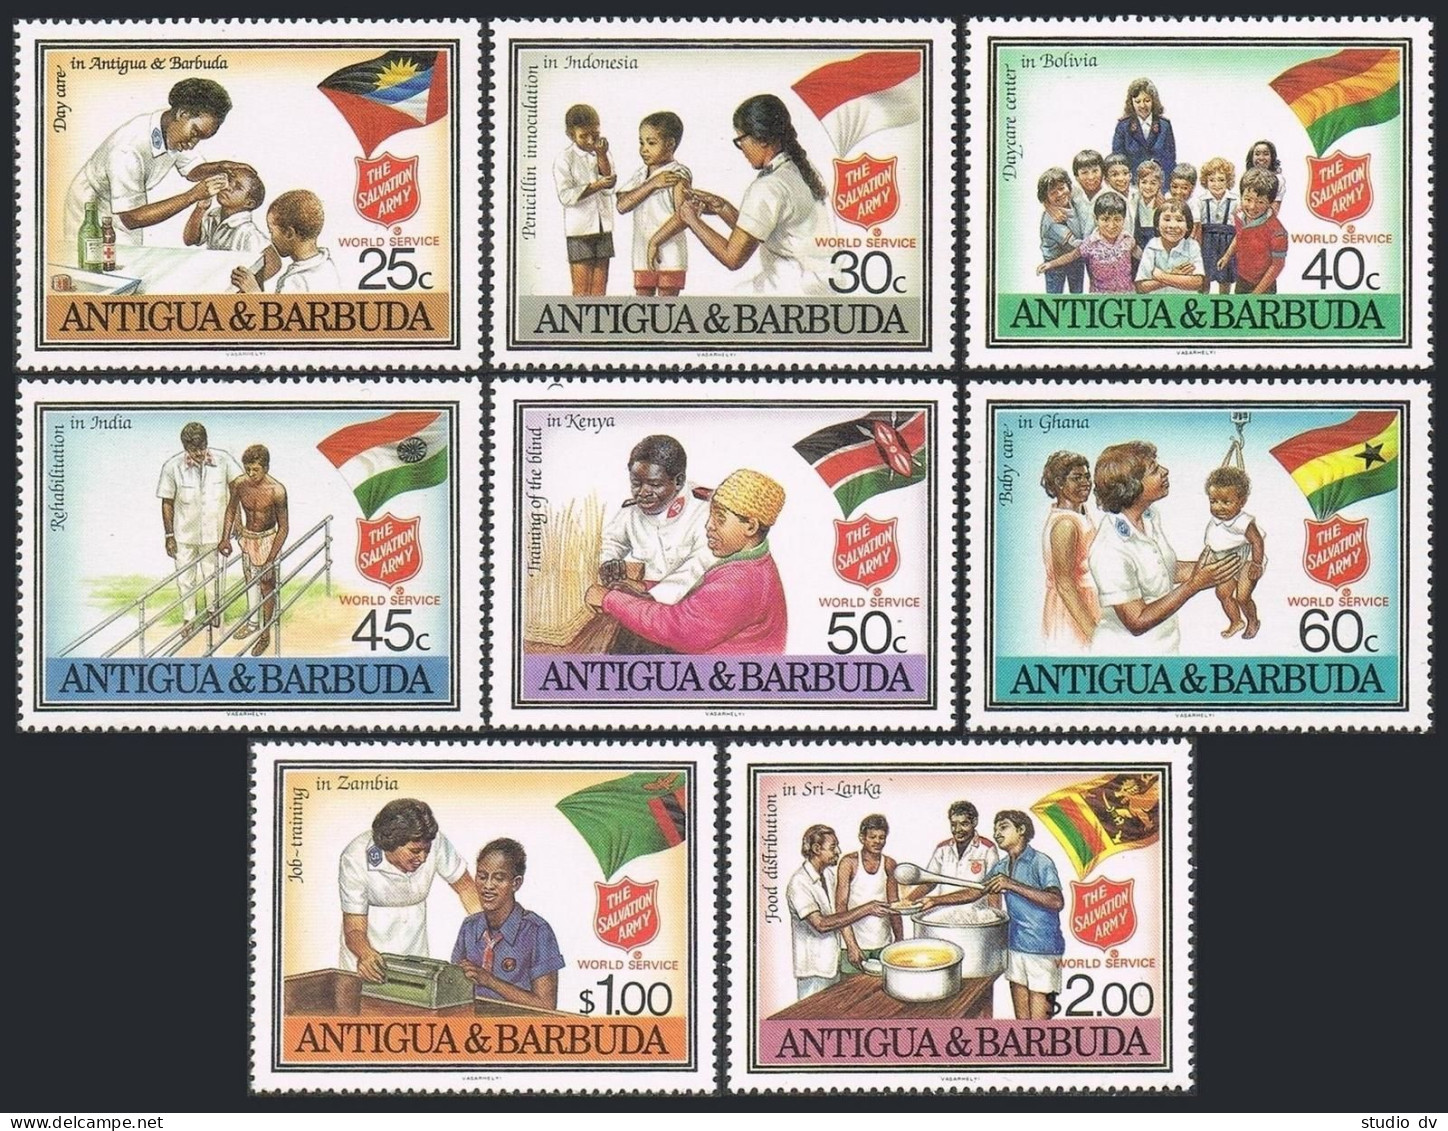 Antigua 1083-1090, MNH. Michel 1097-1104. Salvation Army, 1988. Medicinal Help. - Antigua And Barbuda (1981-...)